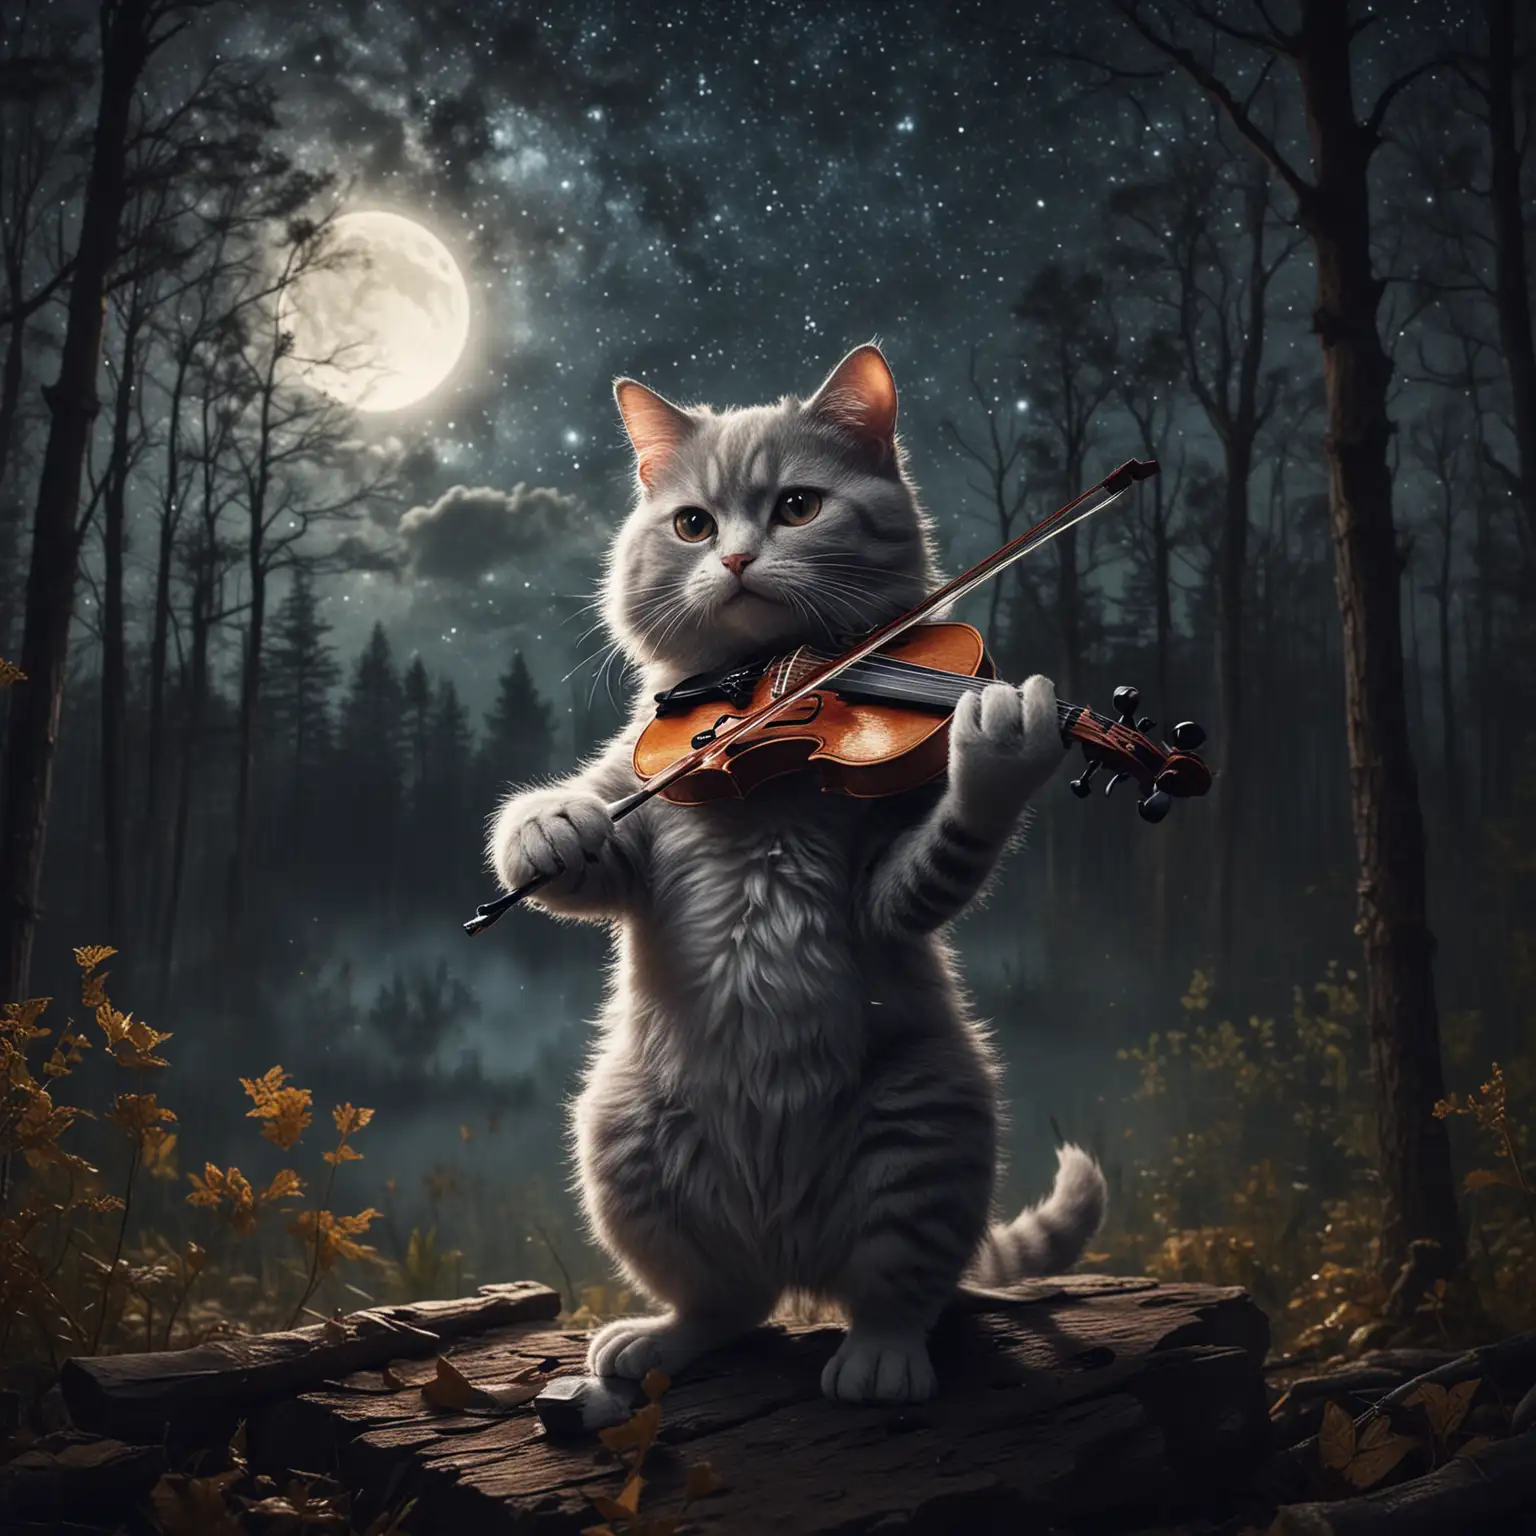 Cat Playing Violin in Moonlit Woods